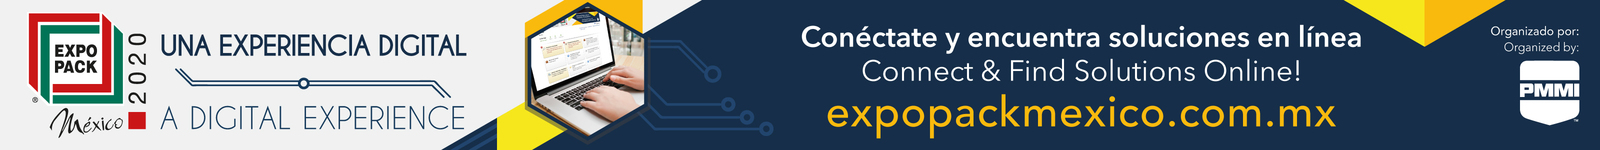 EXPO PACK MEXICO 2020 logo